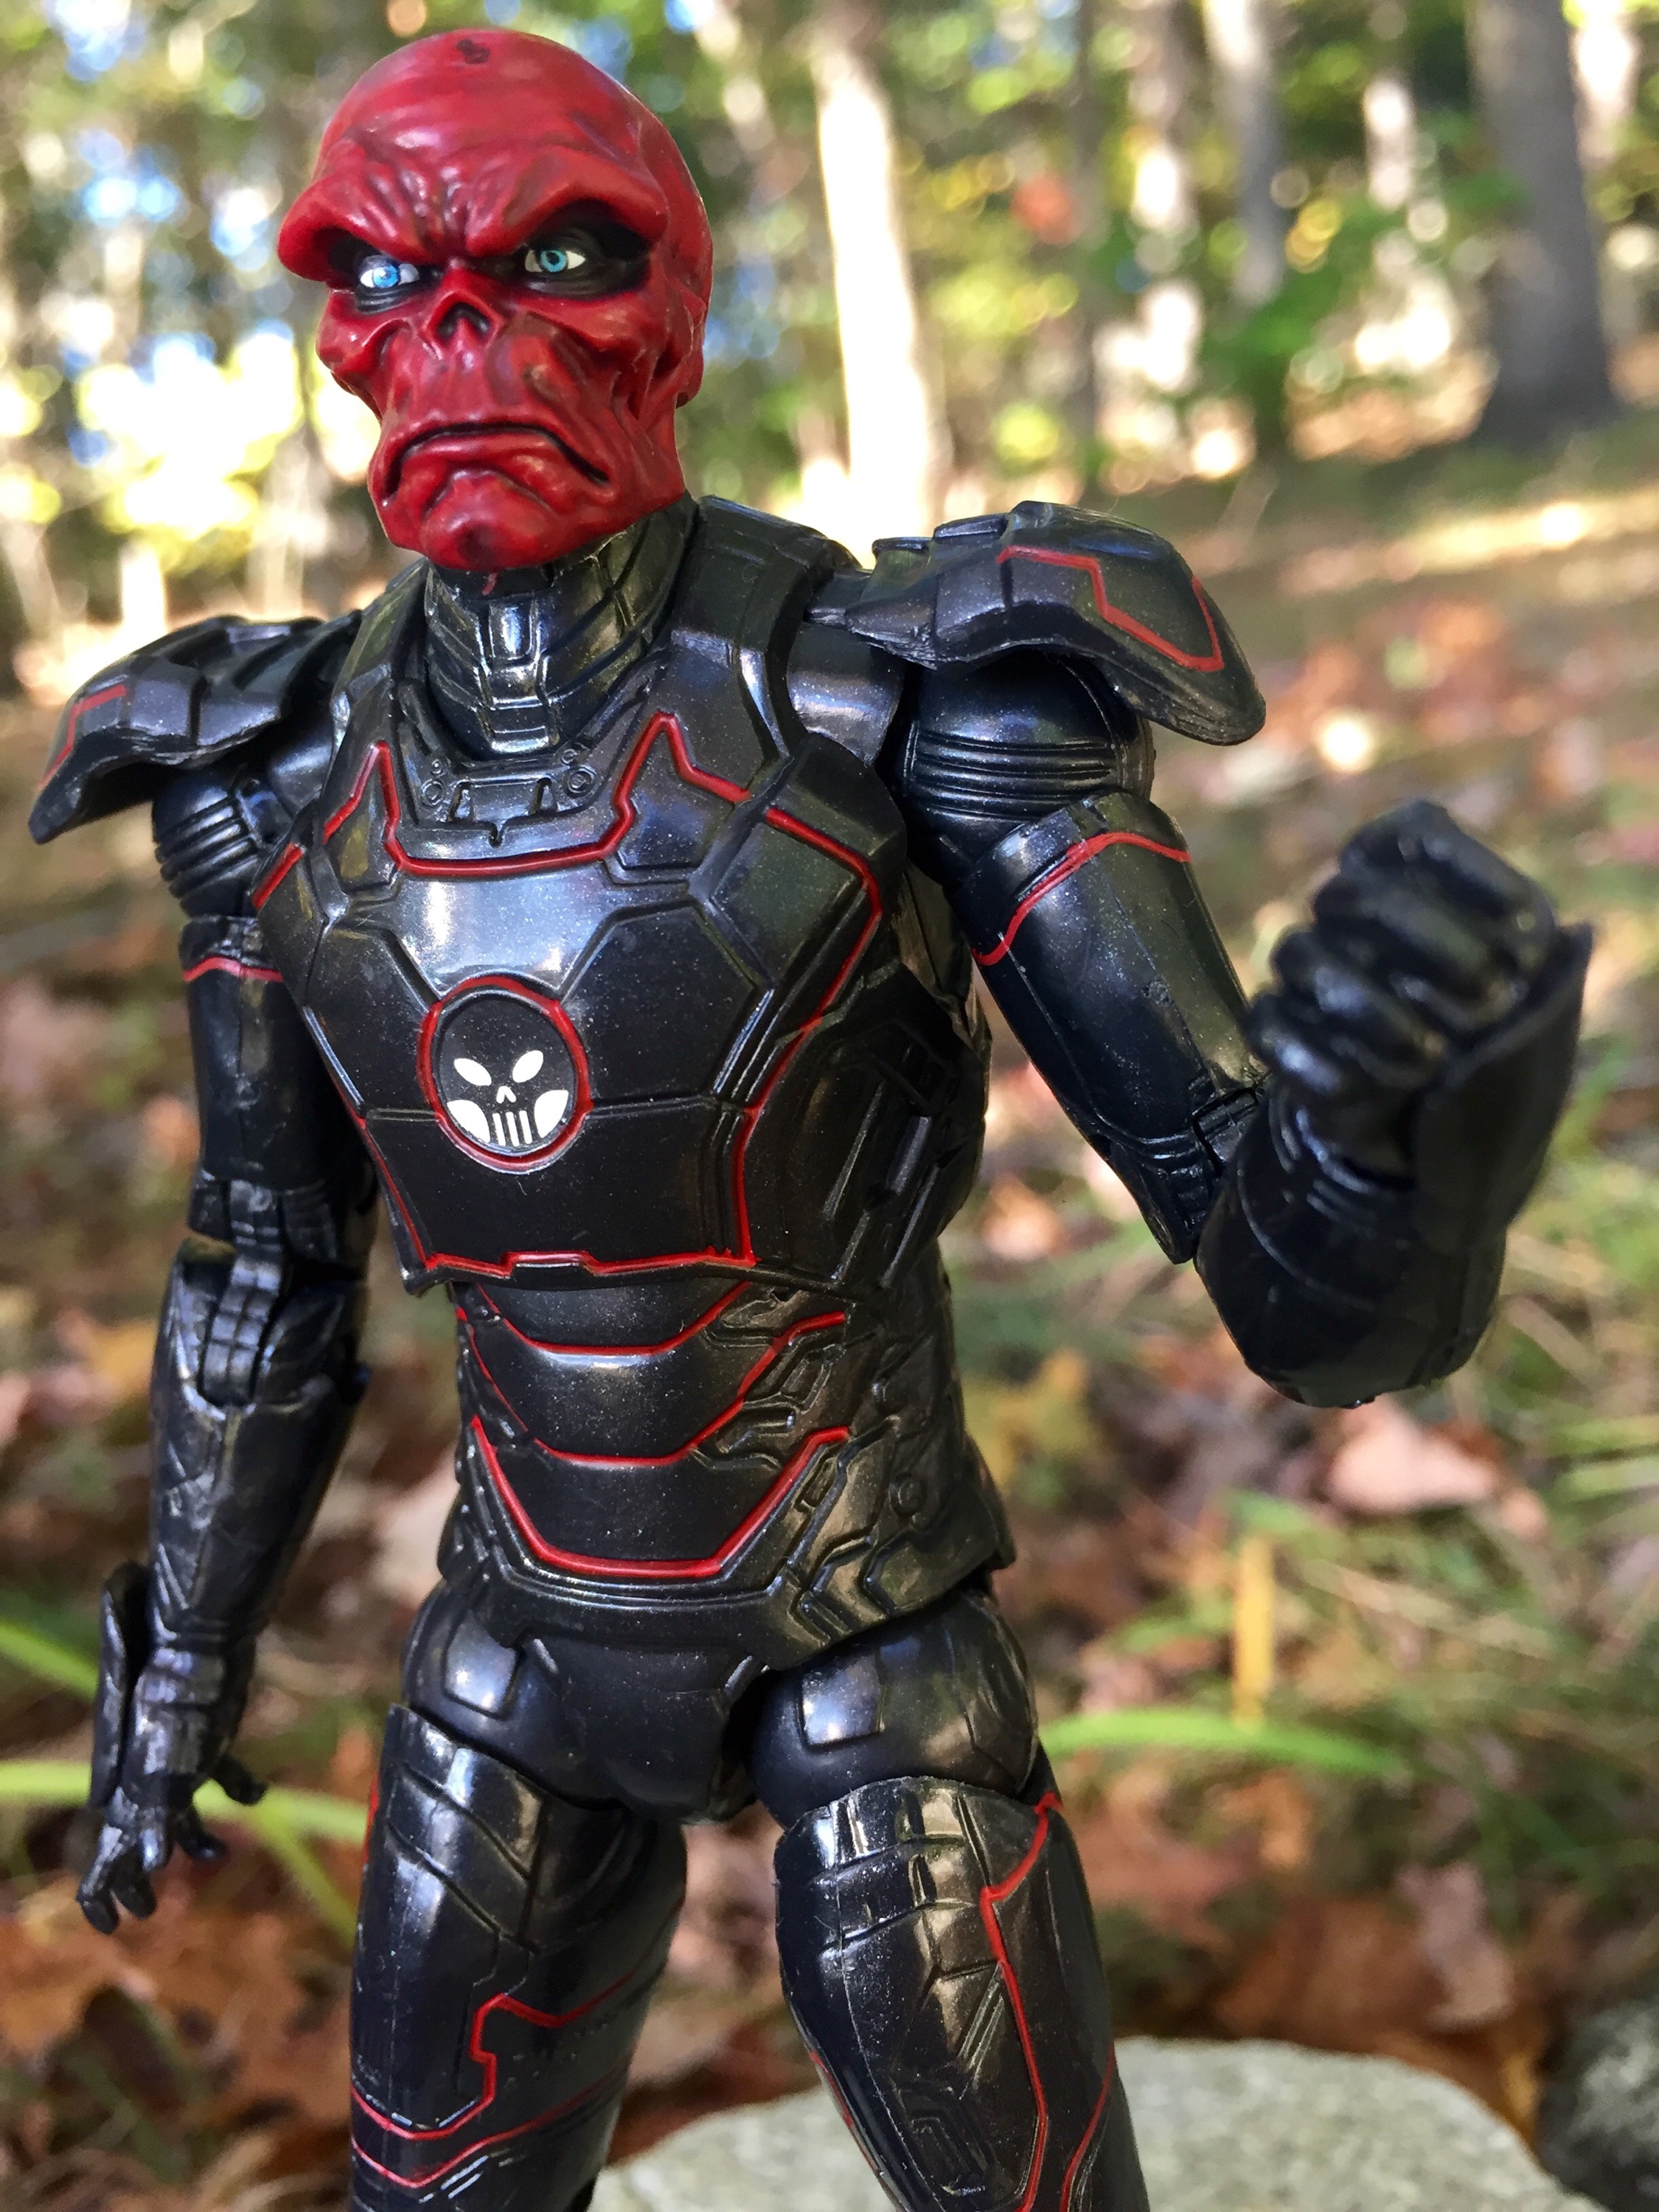 Marvel Legends Iron Skull Red Skull Review & Photos